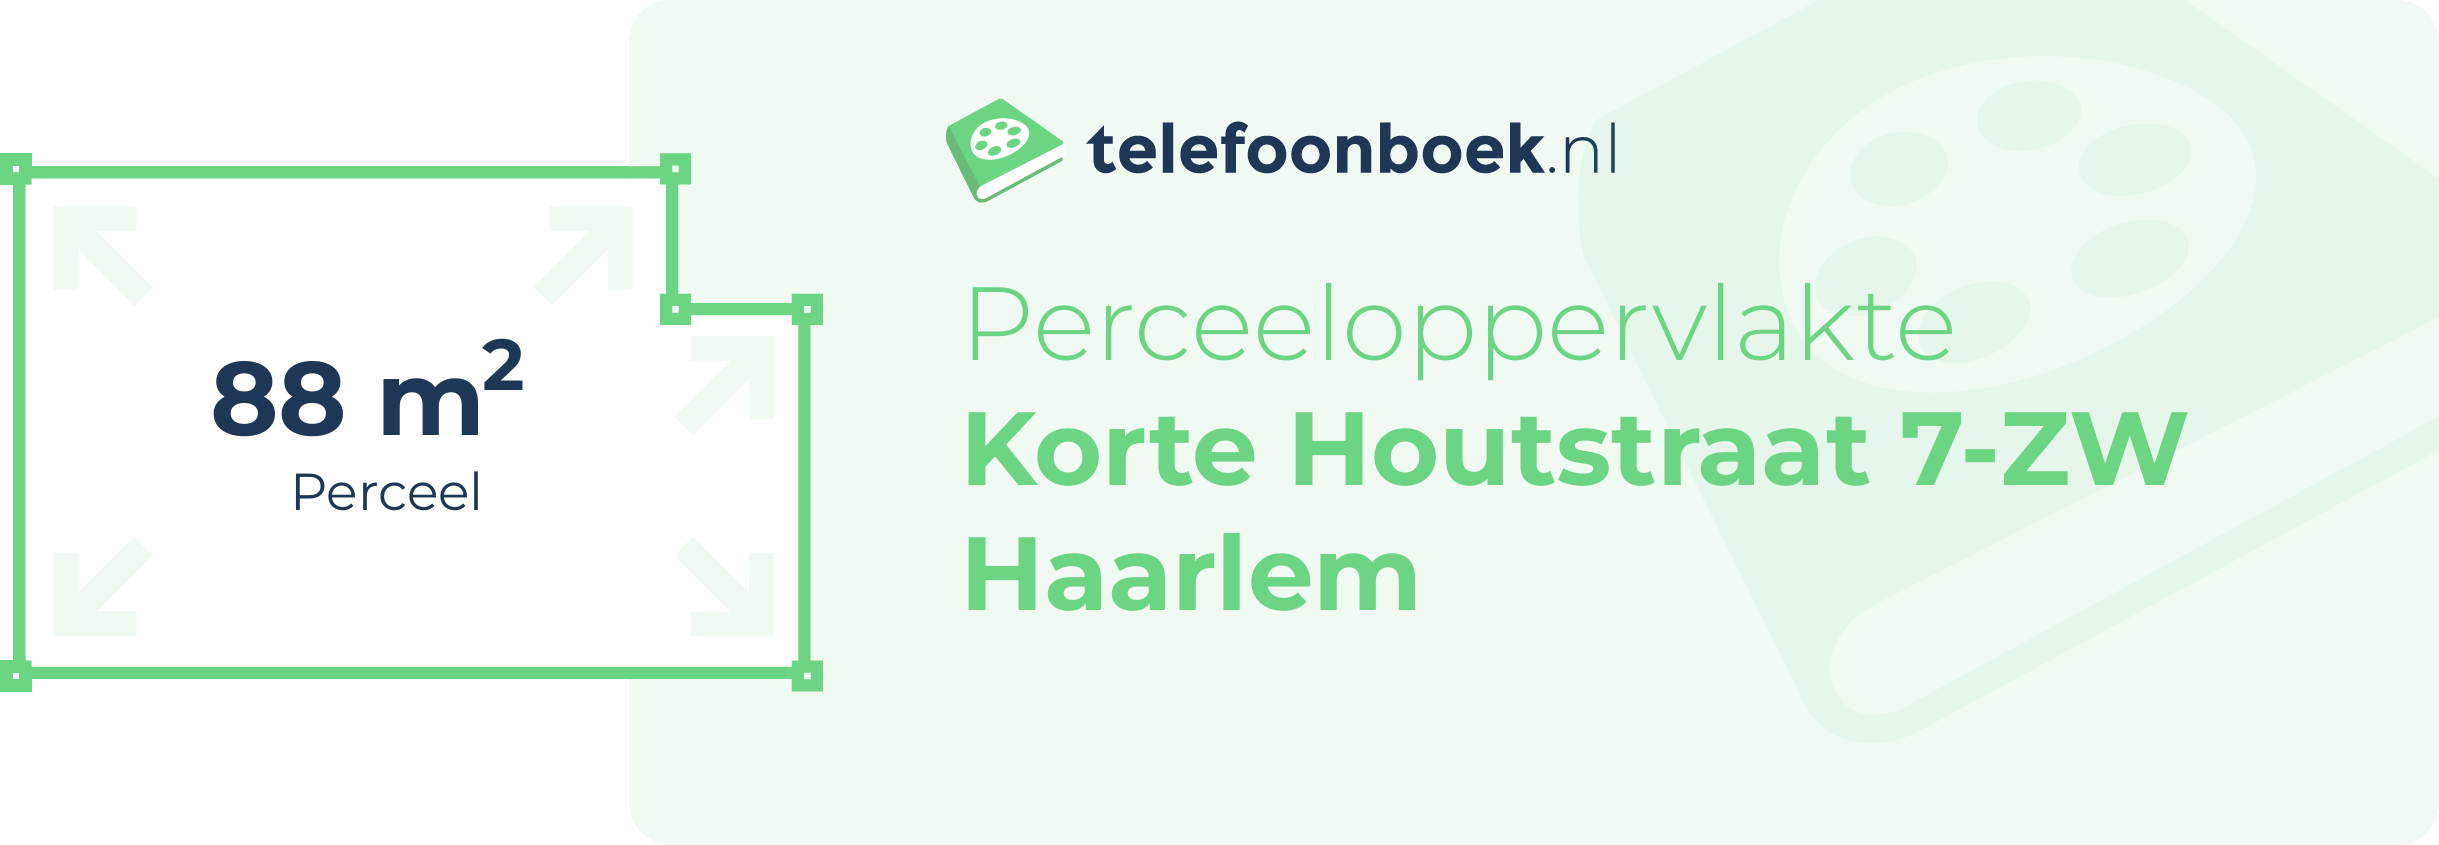 Perceeloppervlakte Korte Houtstraat 7-ZW Haarlem